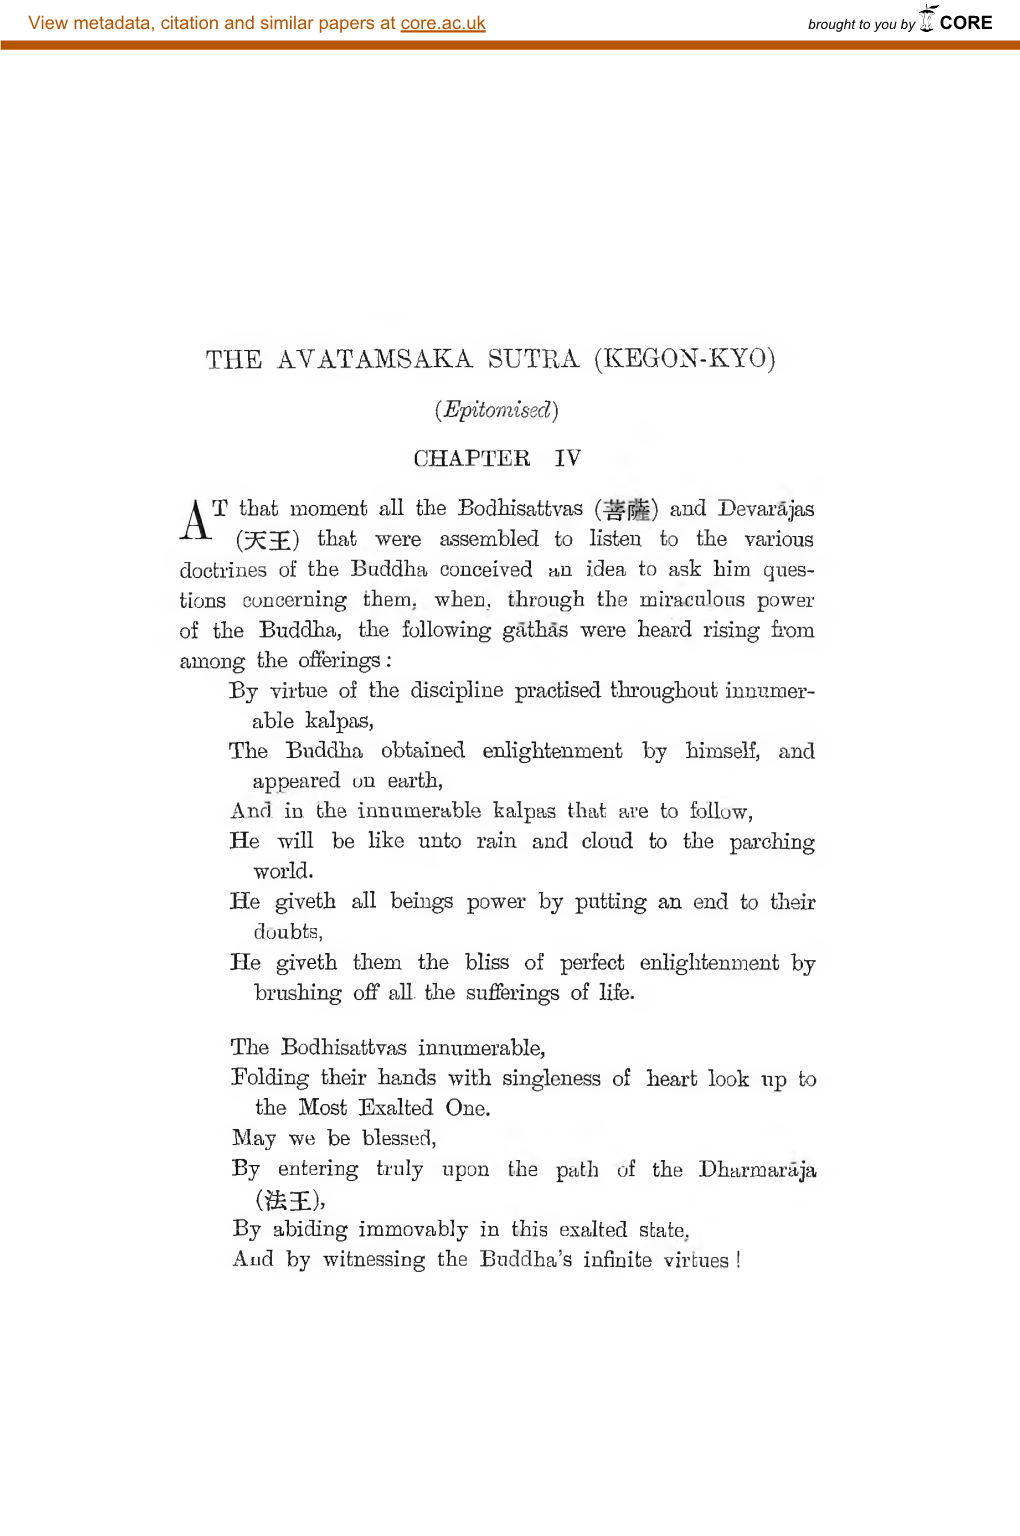 The Avatamsaka Sutra (Kegon-Kyo)